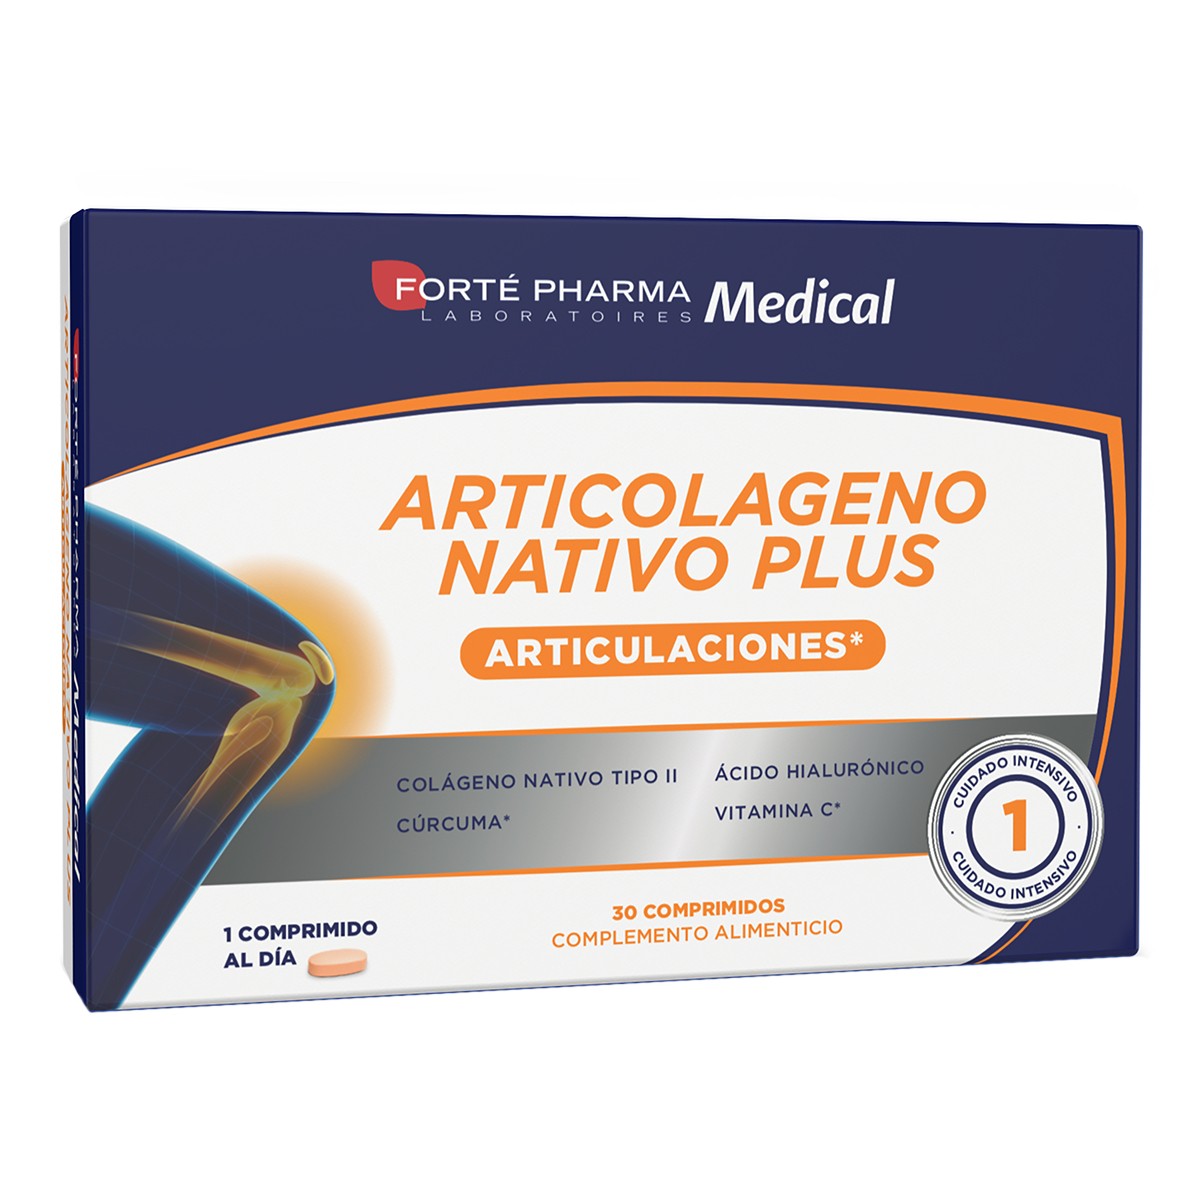 Forte pharma articolageno nativo plus 30 comprimidos